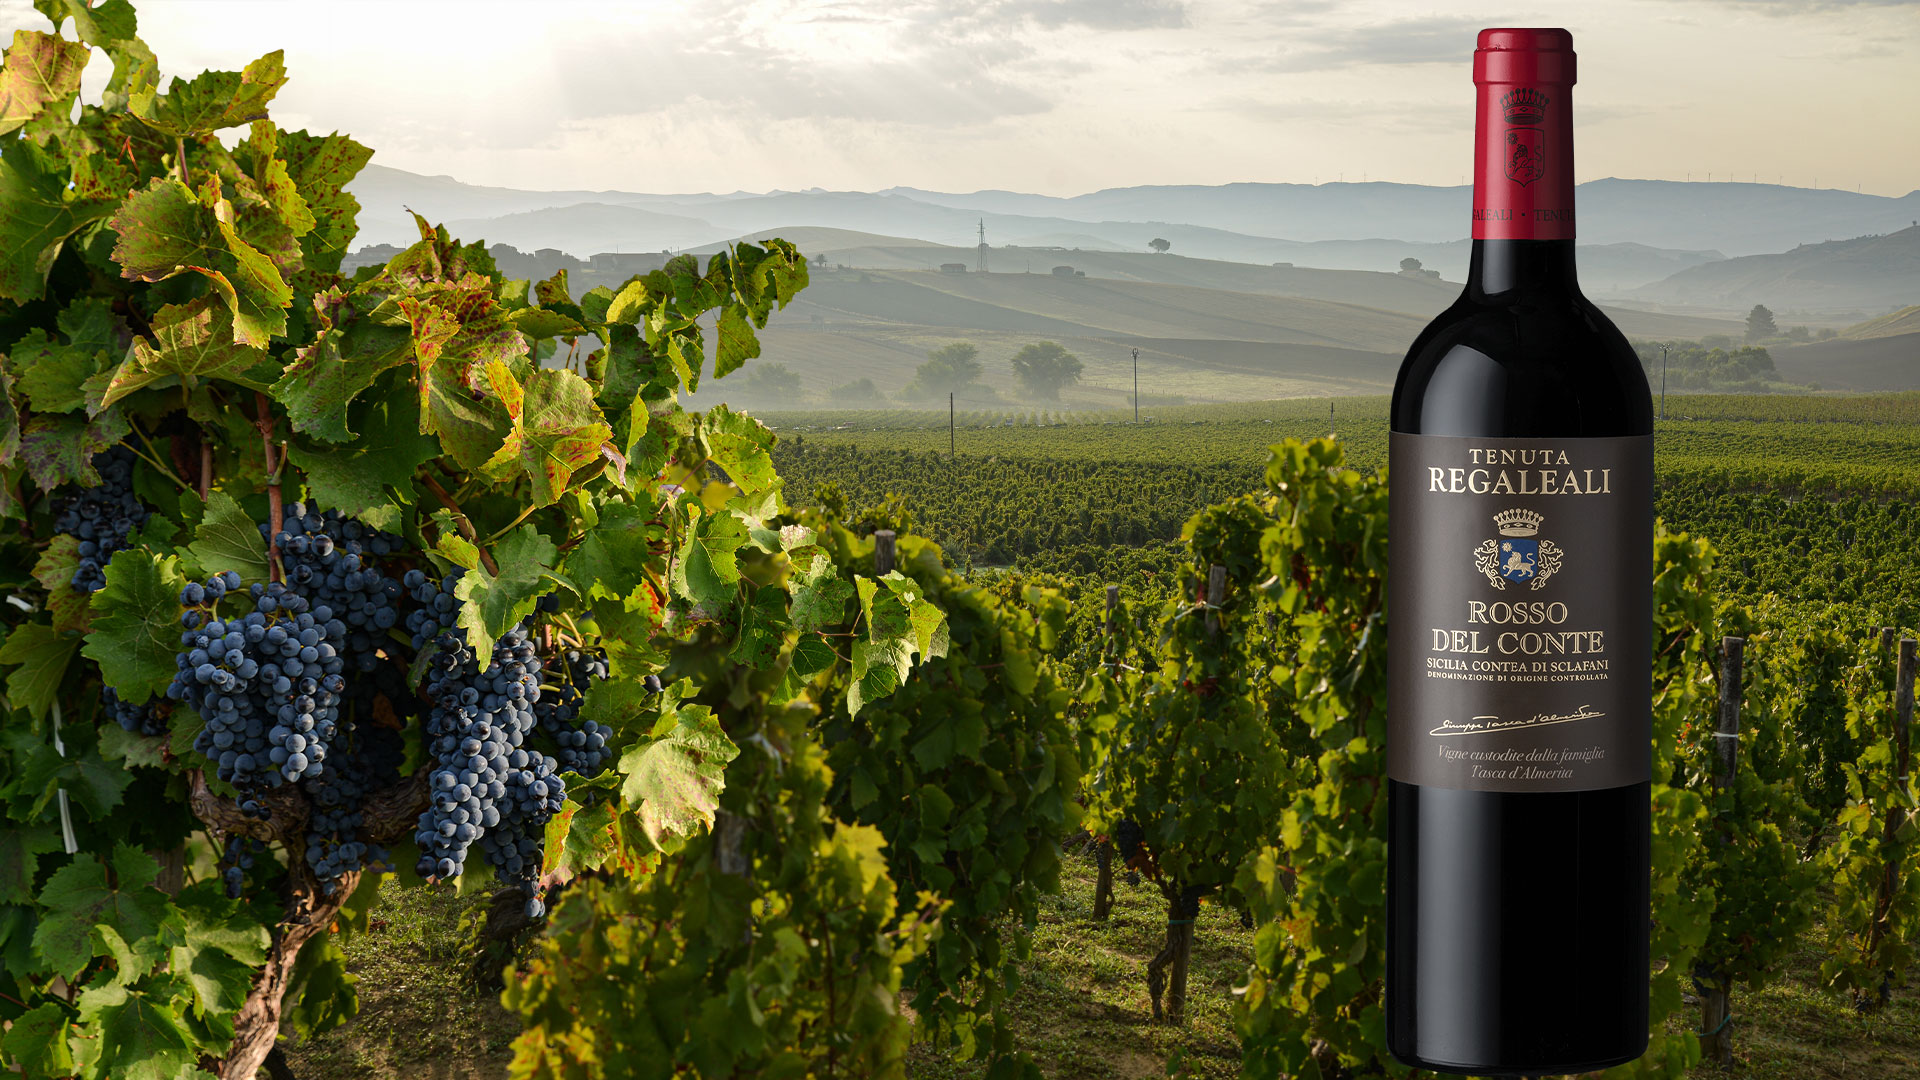 Super Sicilian: Springing from vineyards aplenty, Sicily’s splendid indigenous grapes are setting the wine world alight